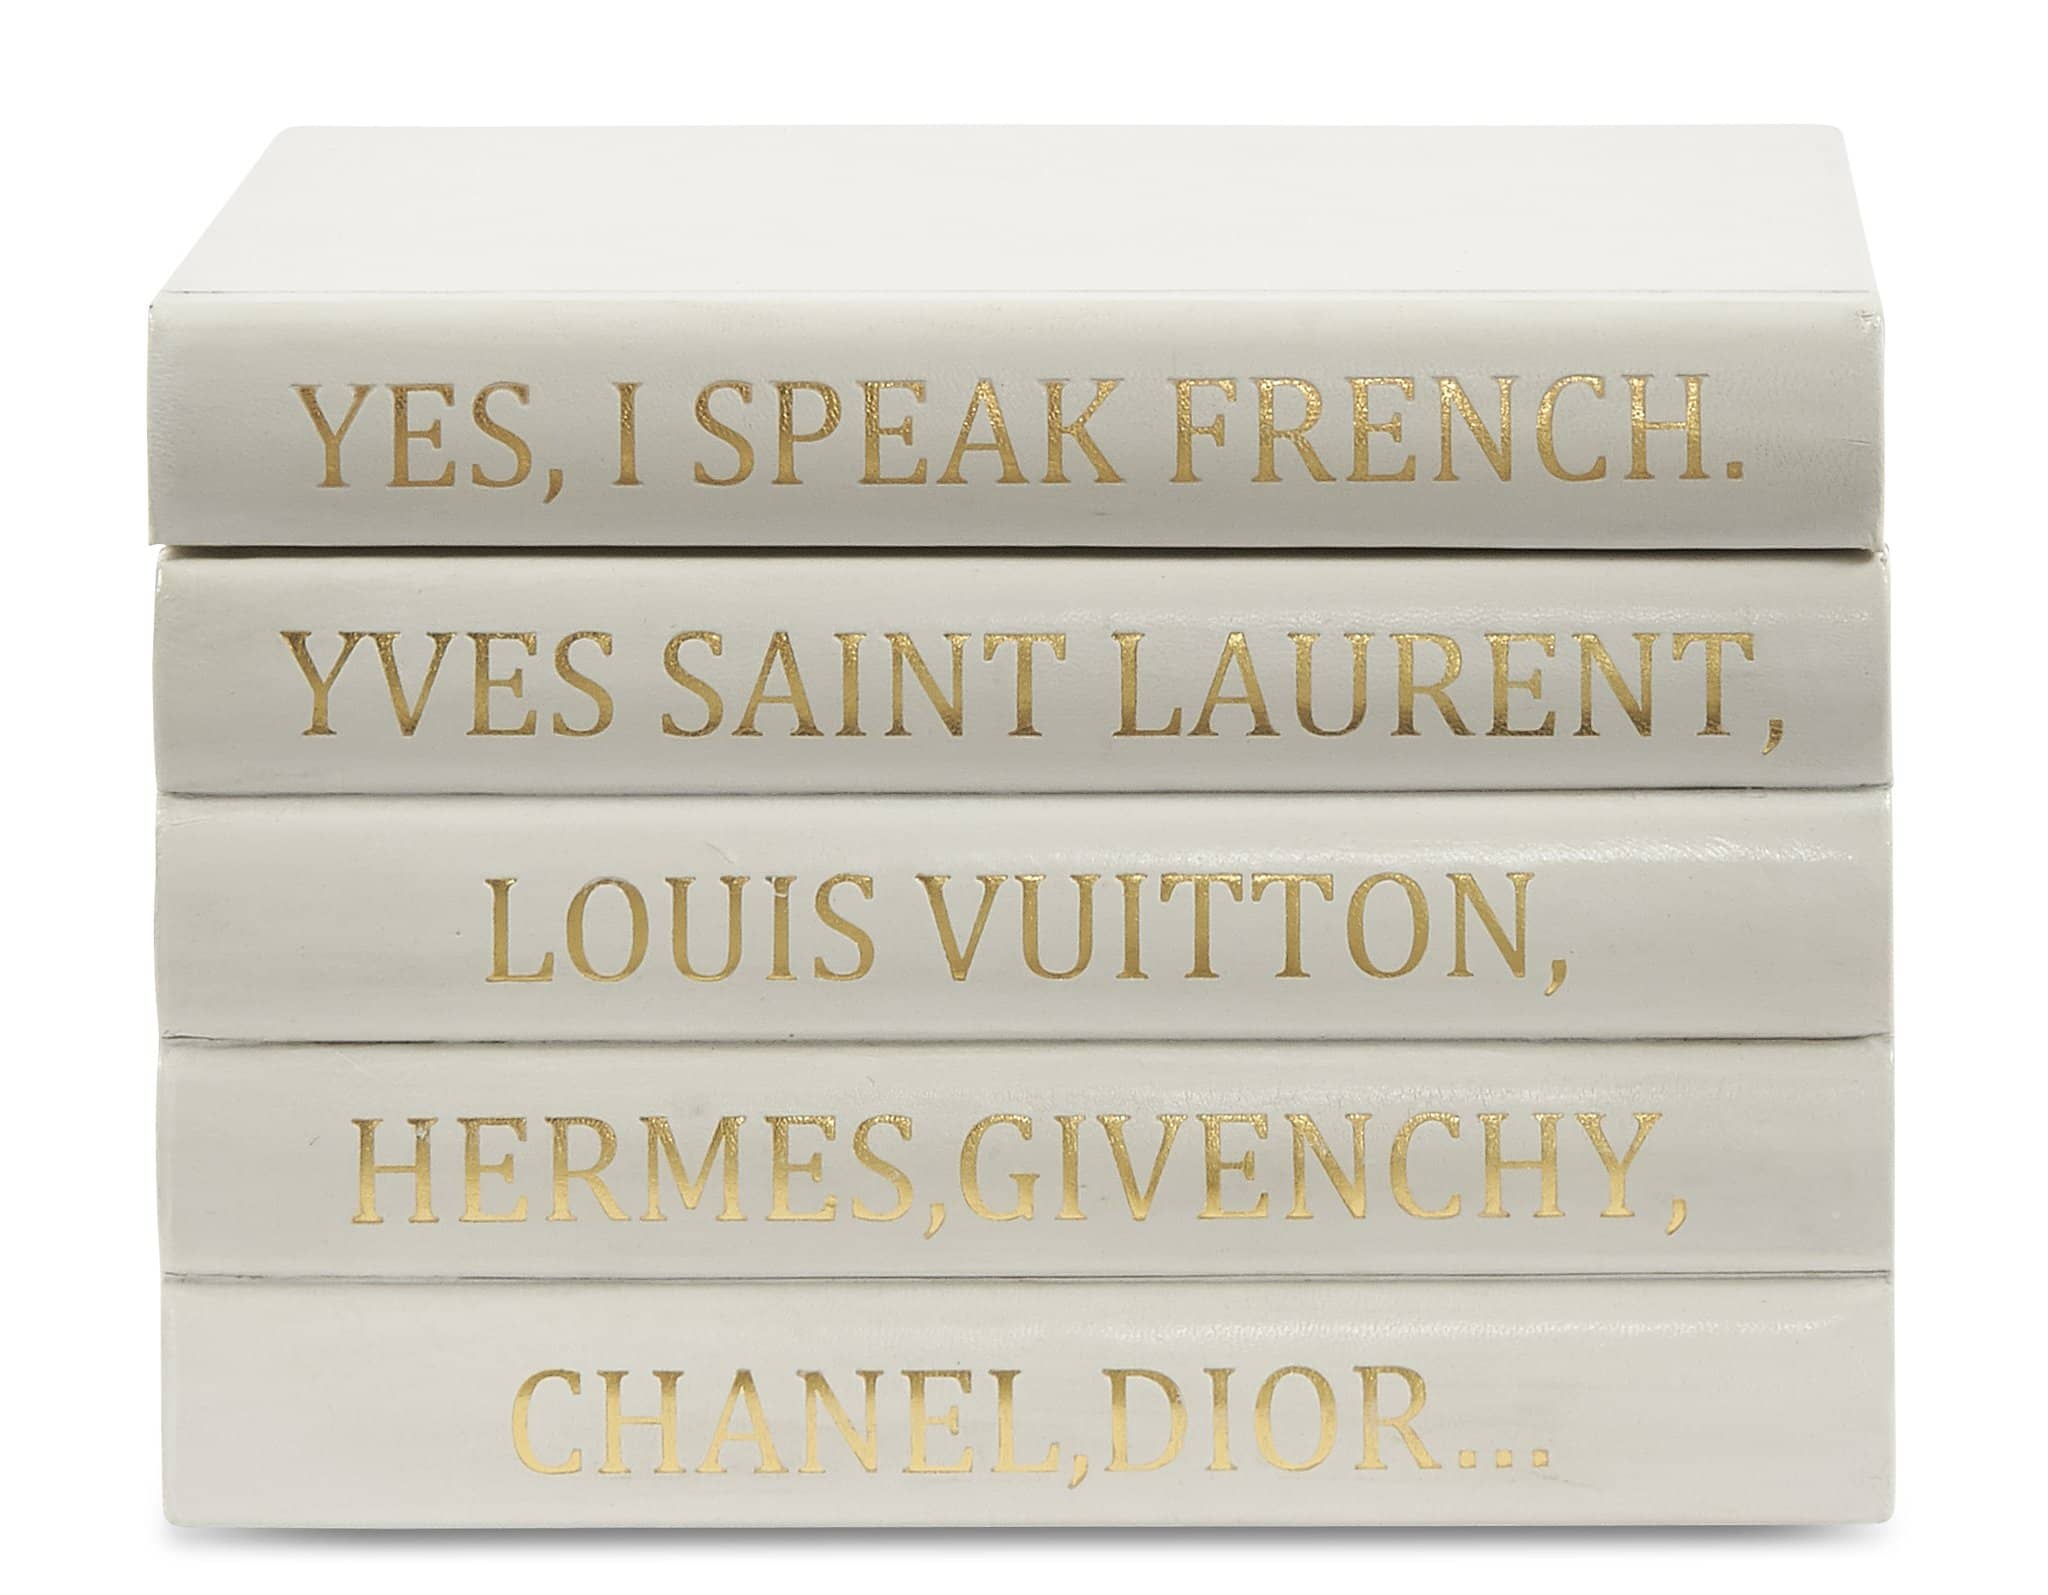 White Leather Bound Box with "Yes I speak French..."